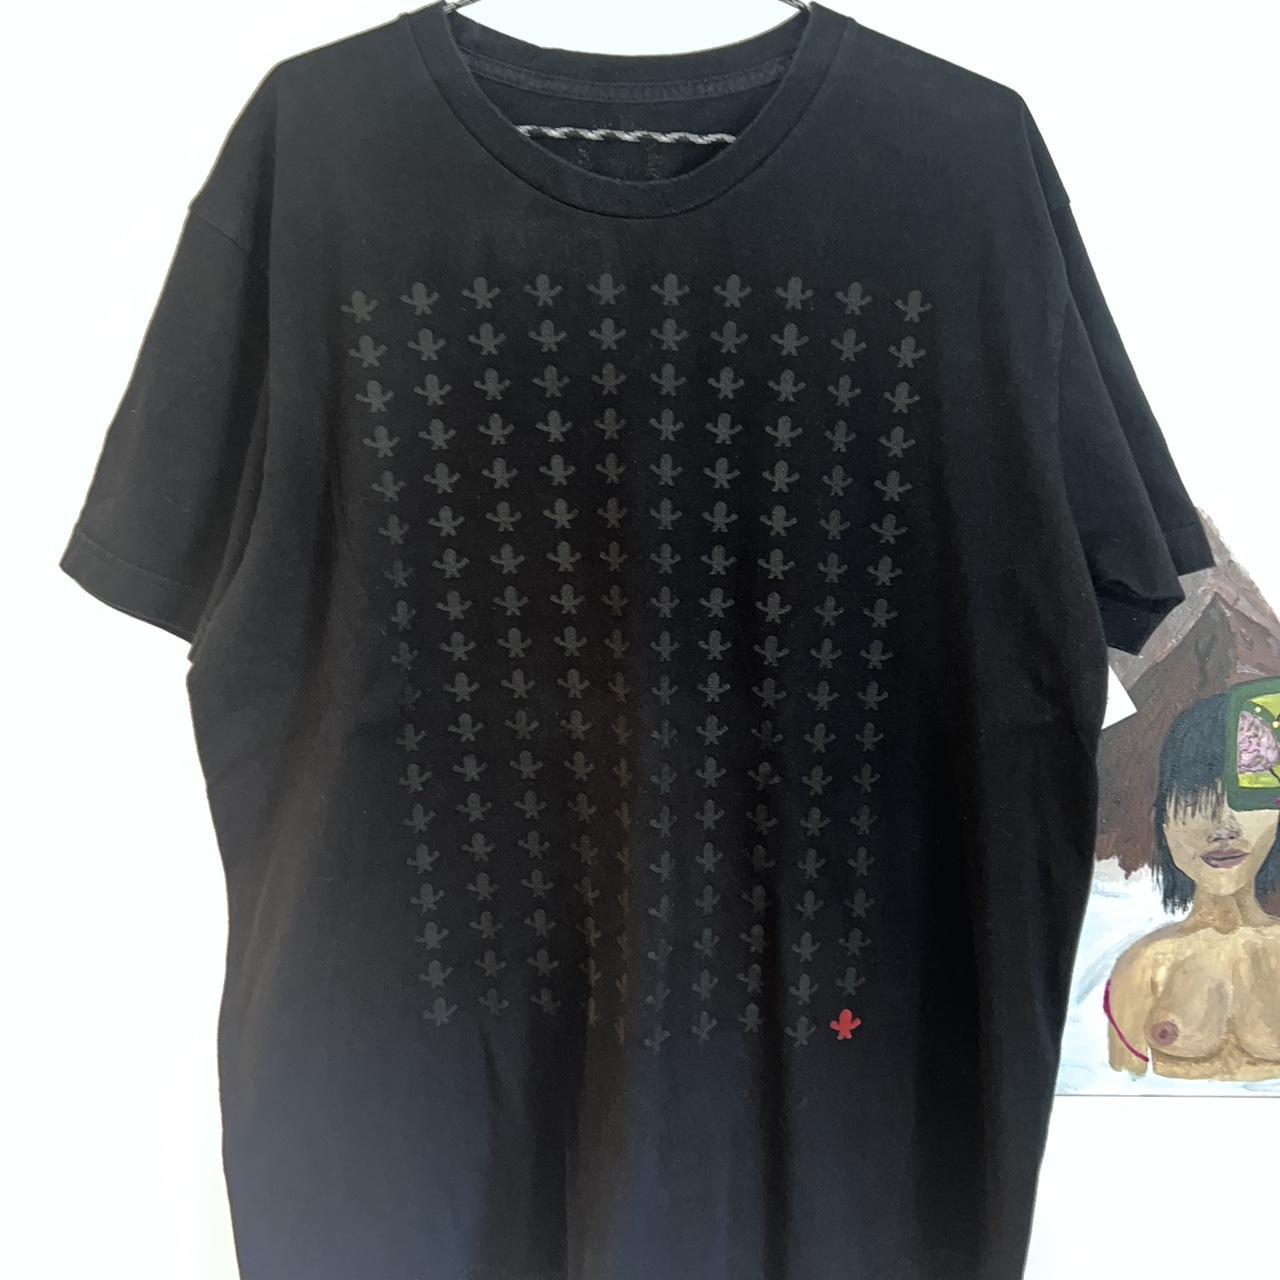 Chrome Hearts Men's T-Shirt - Black - XL